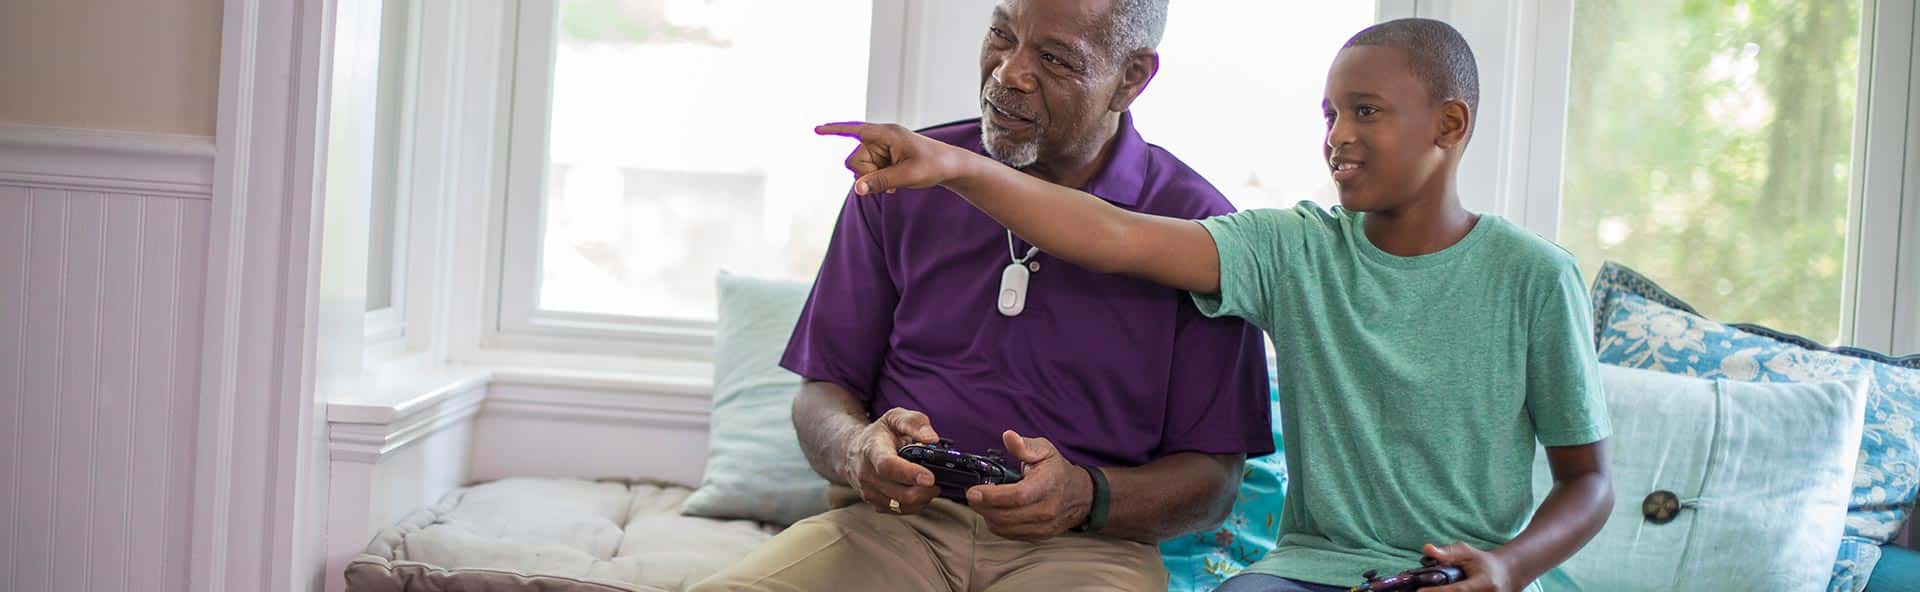 4 Surprising Benefits of Gaming for Older Adults -  Blog